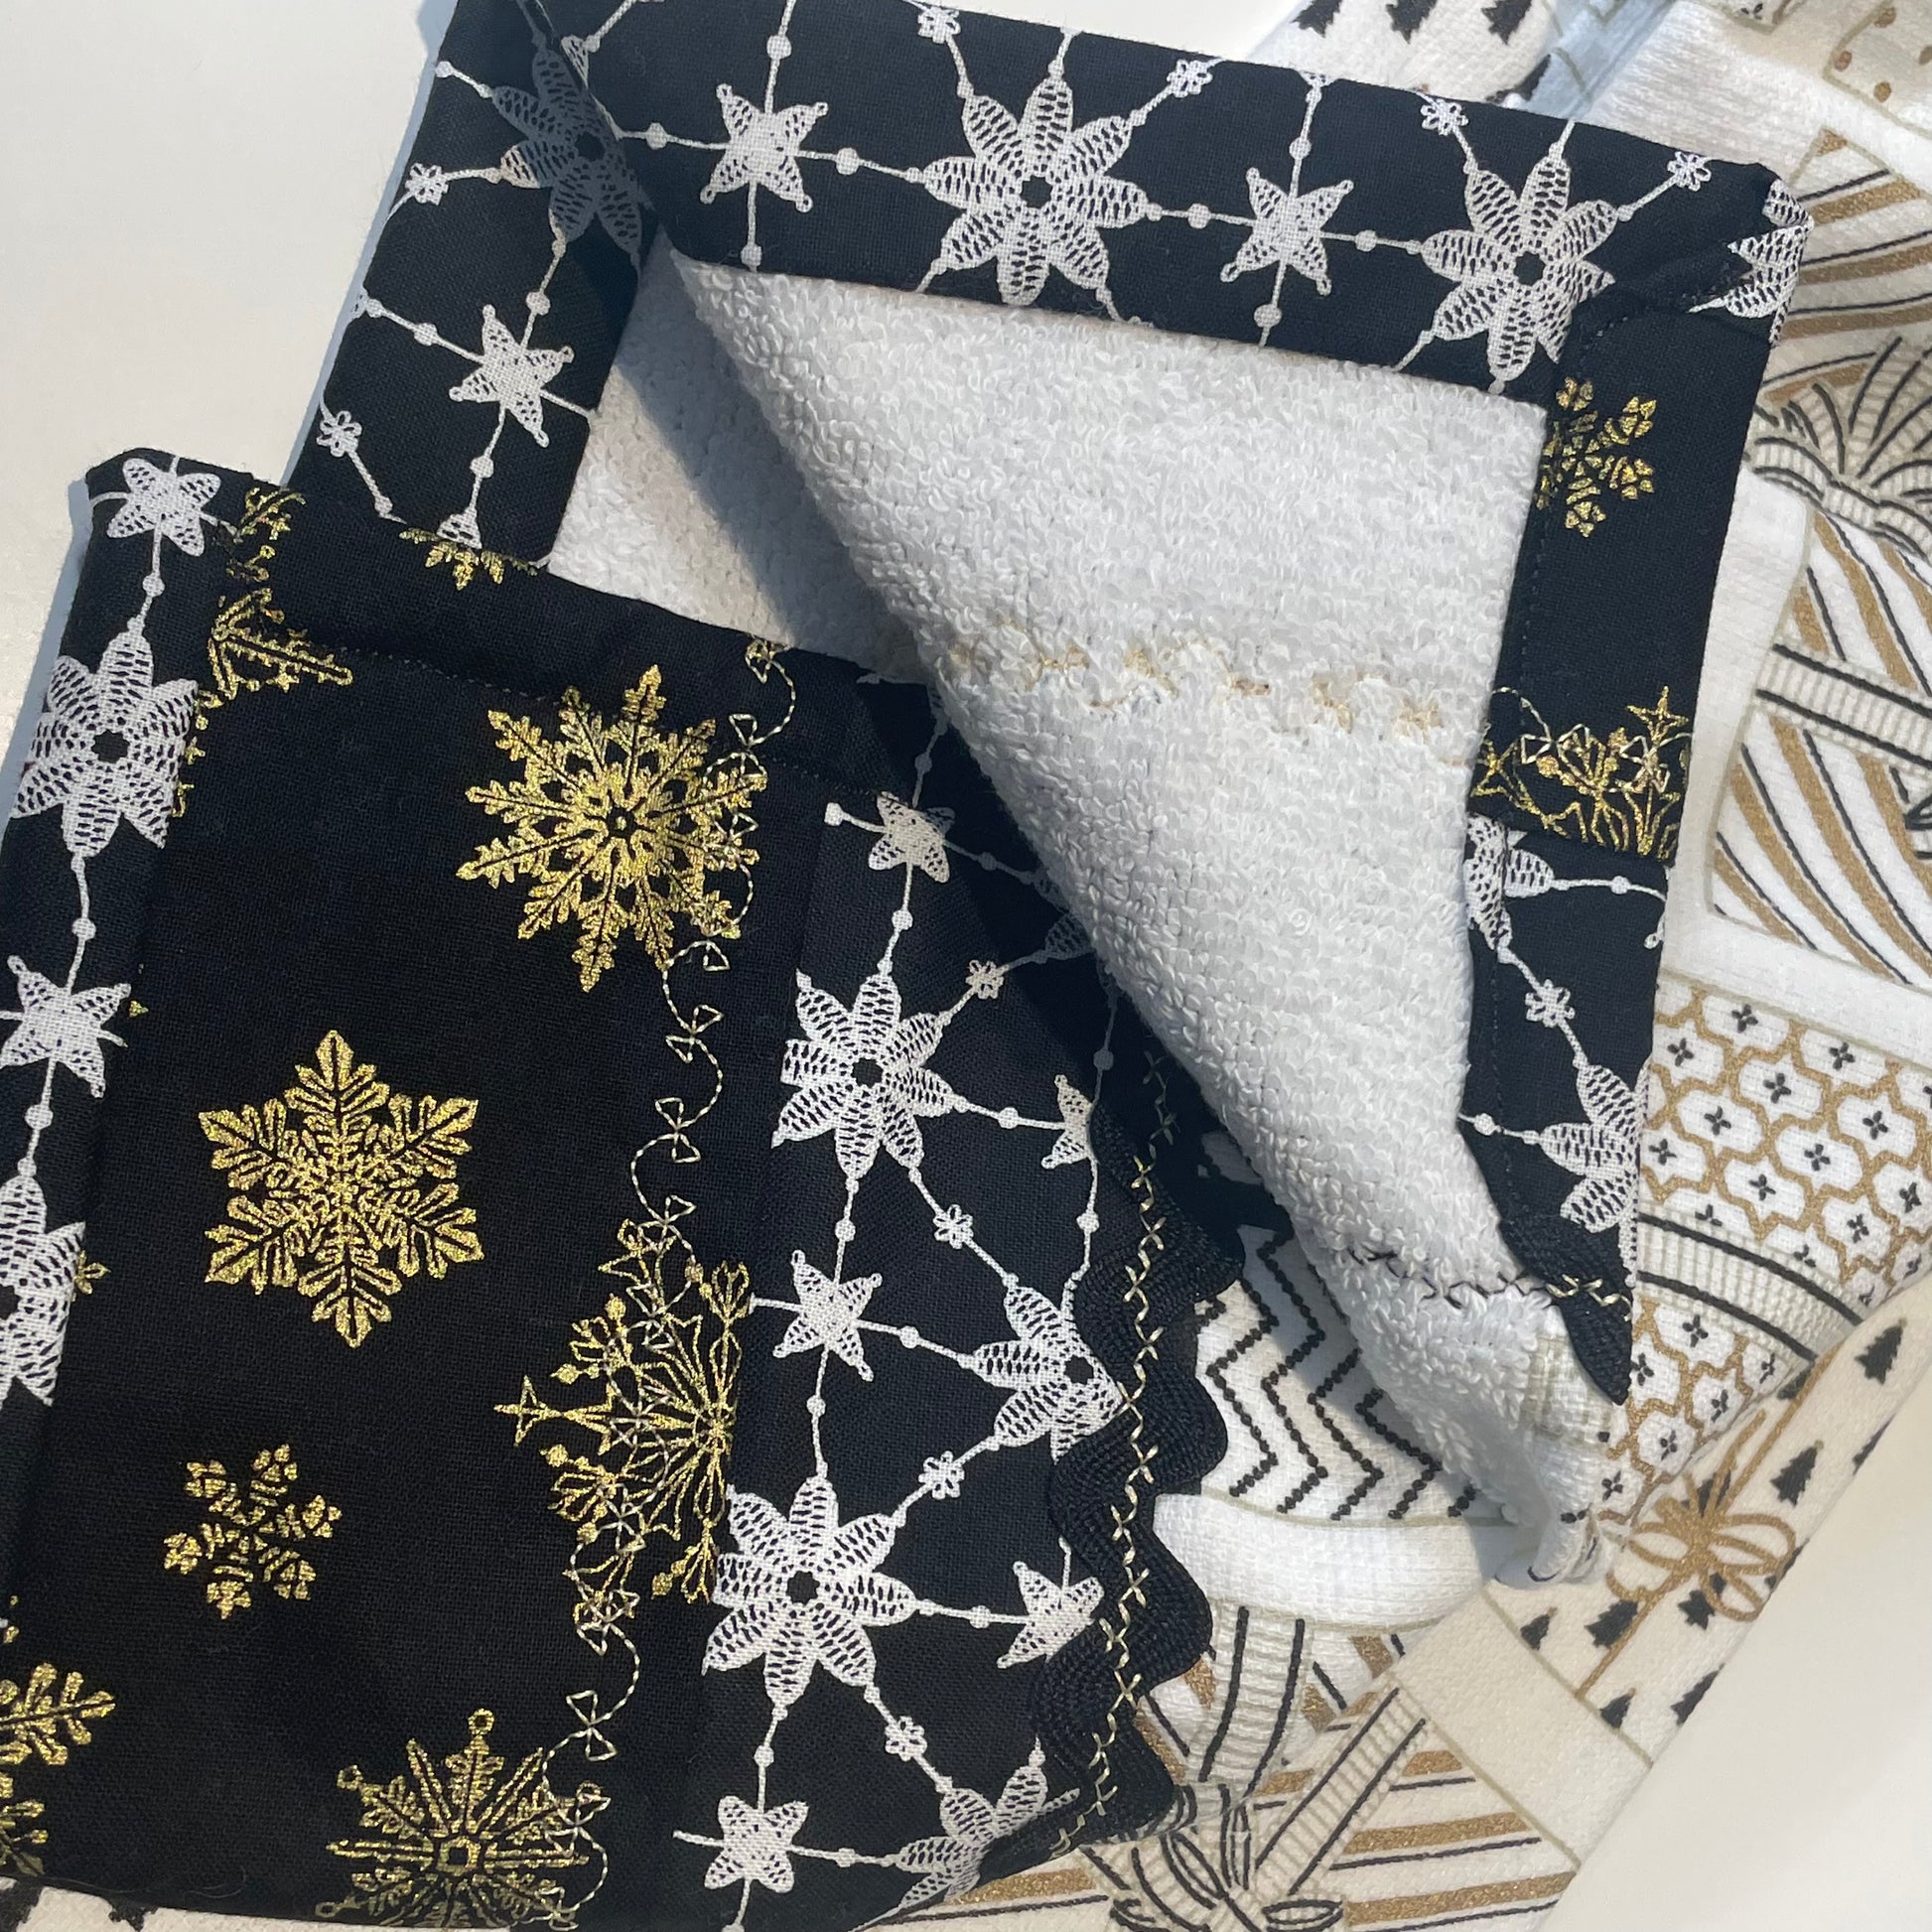 Handmade Christmas Kitchen Dish Towel, Christmas Tea Towel - Home Stitchery Decor